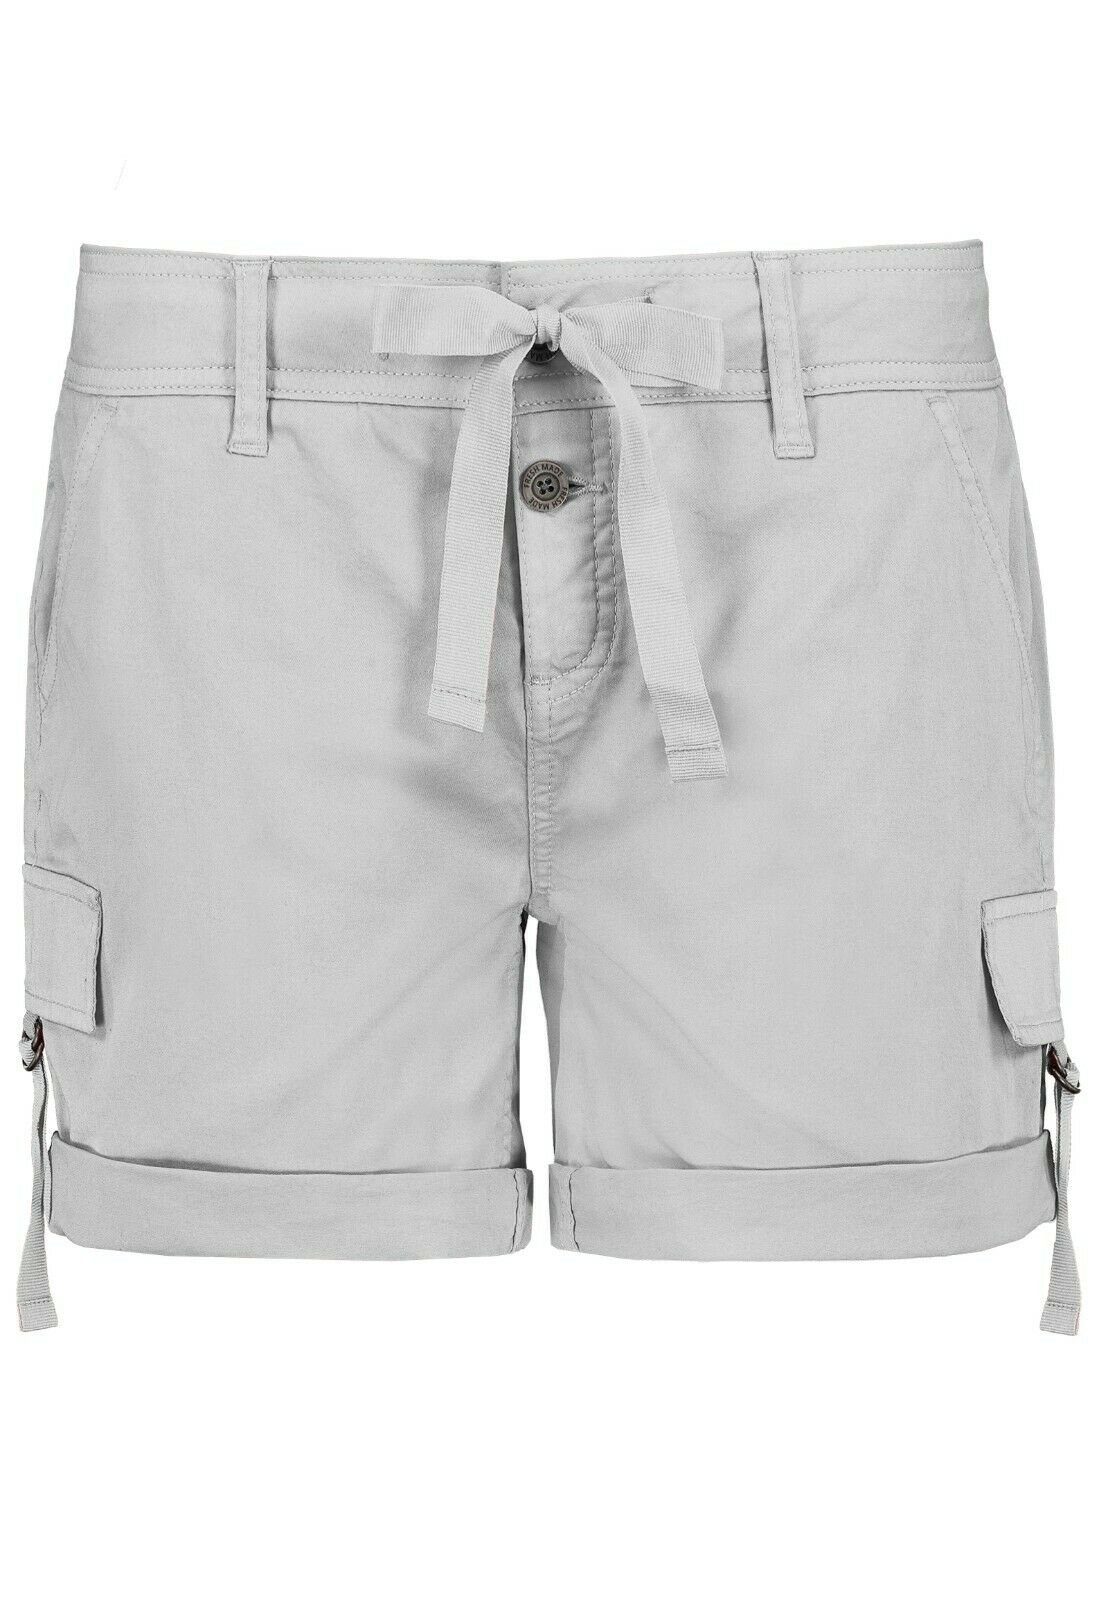 Fresh Made Bermudas Shorts Bermuda Kurze Sommer Hotpants Short Hose